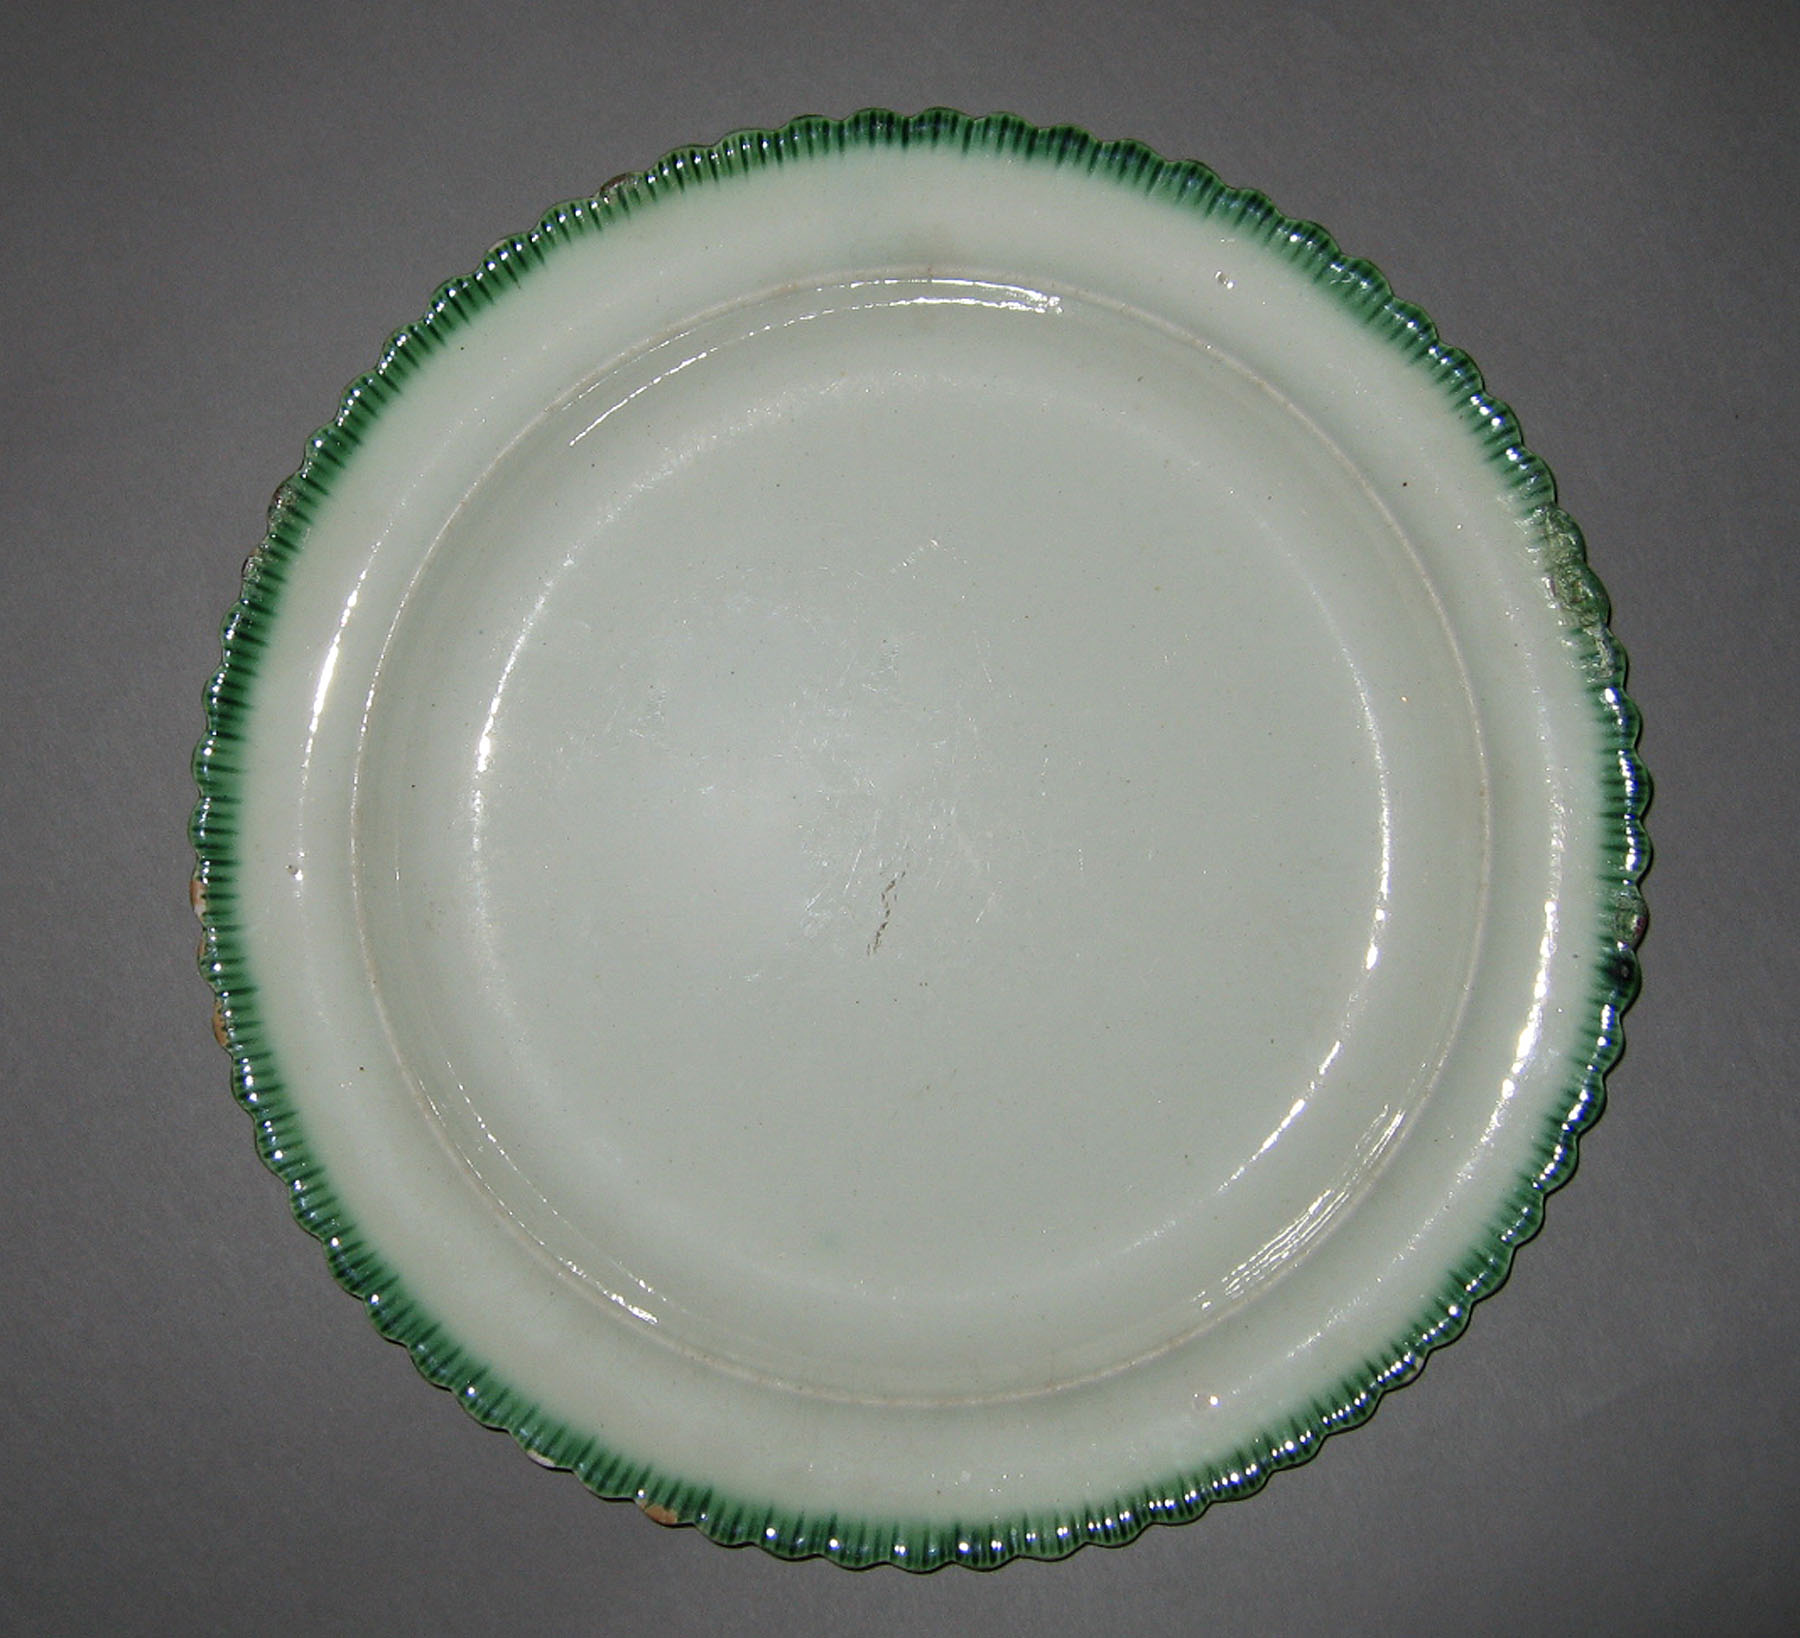 1969.0346.001 Rogers pearlware plate